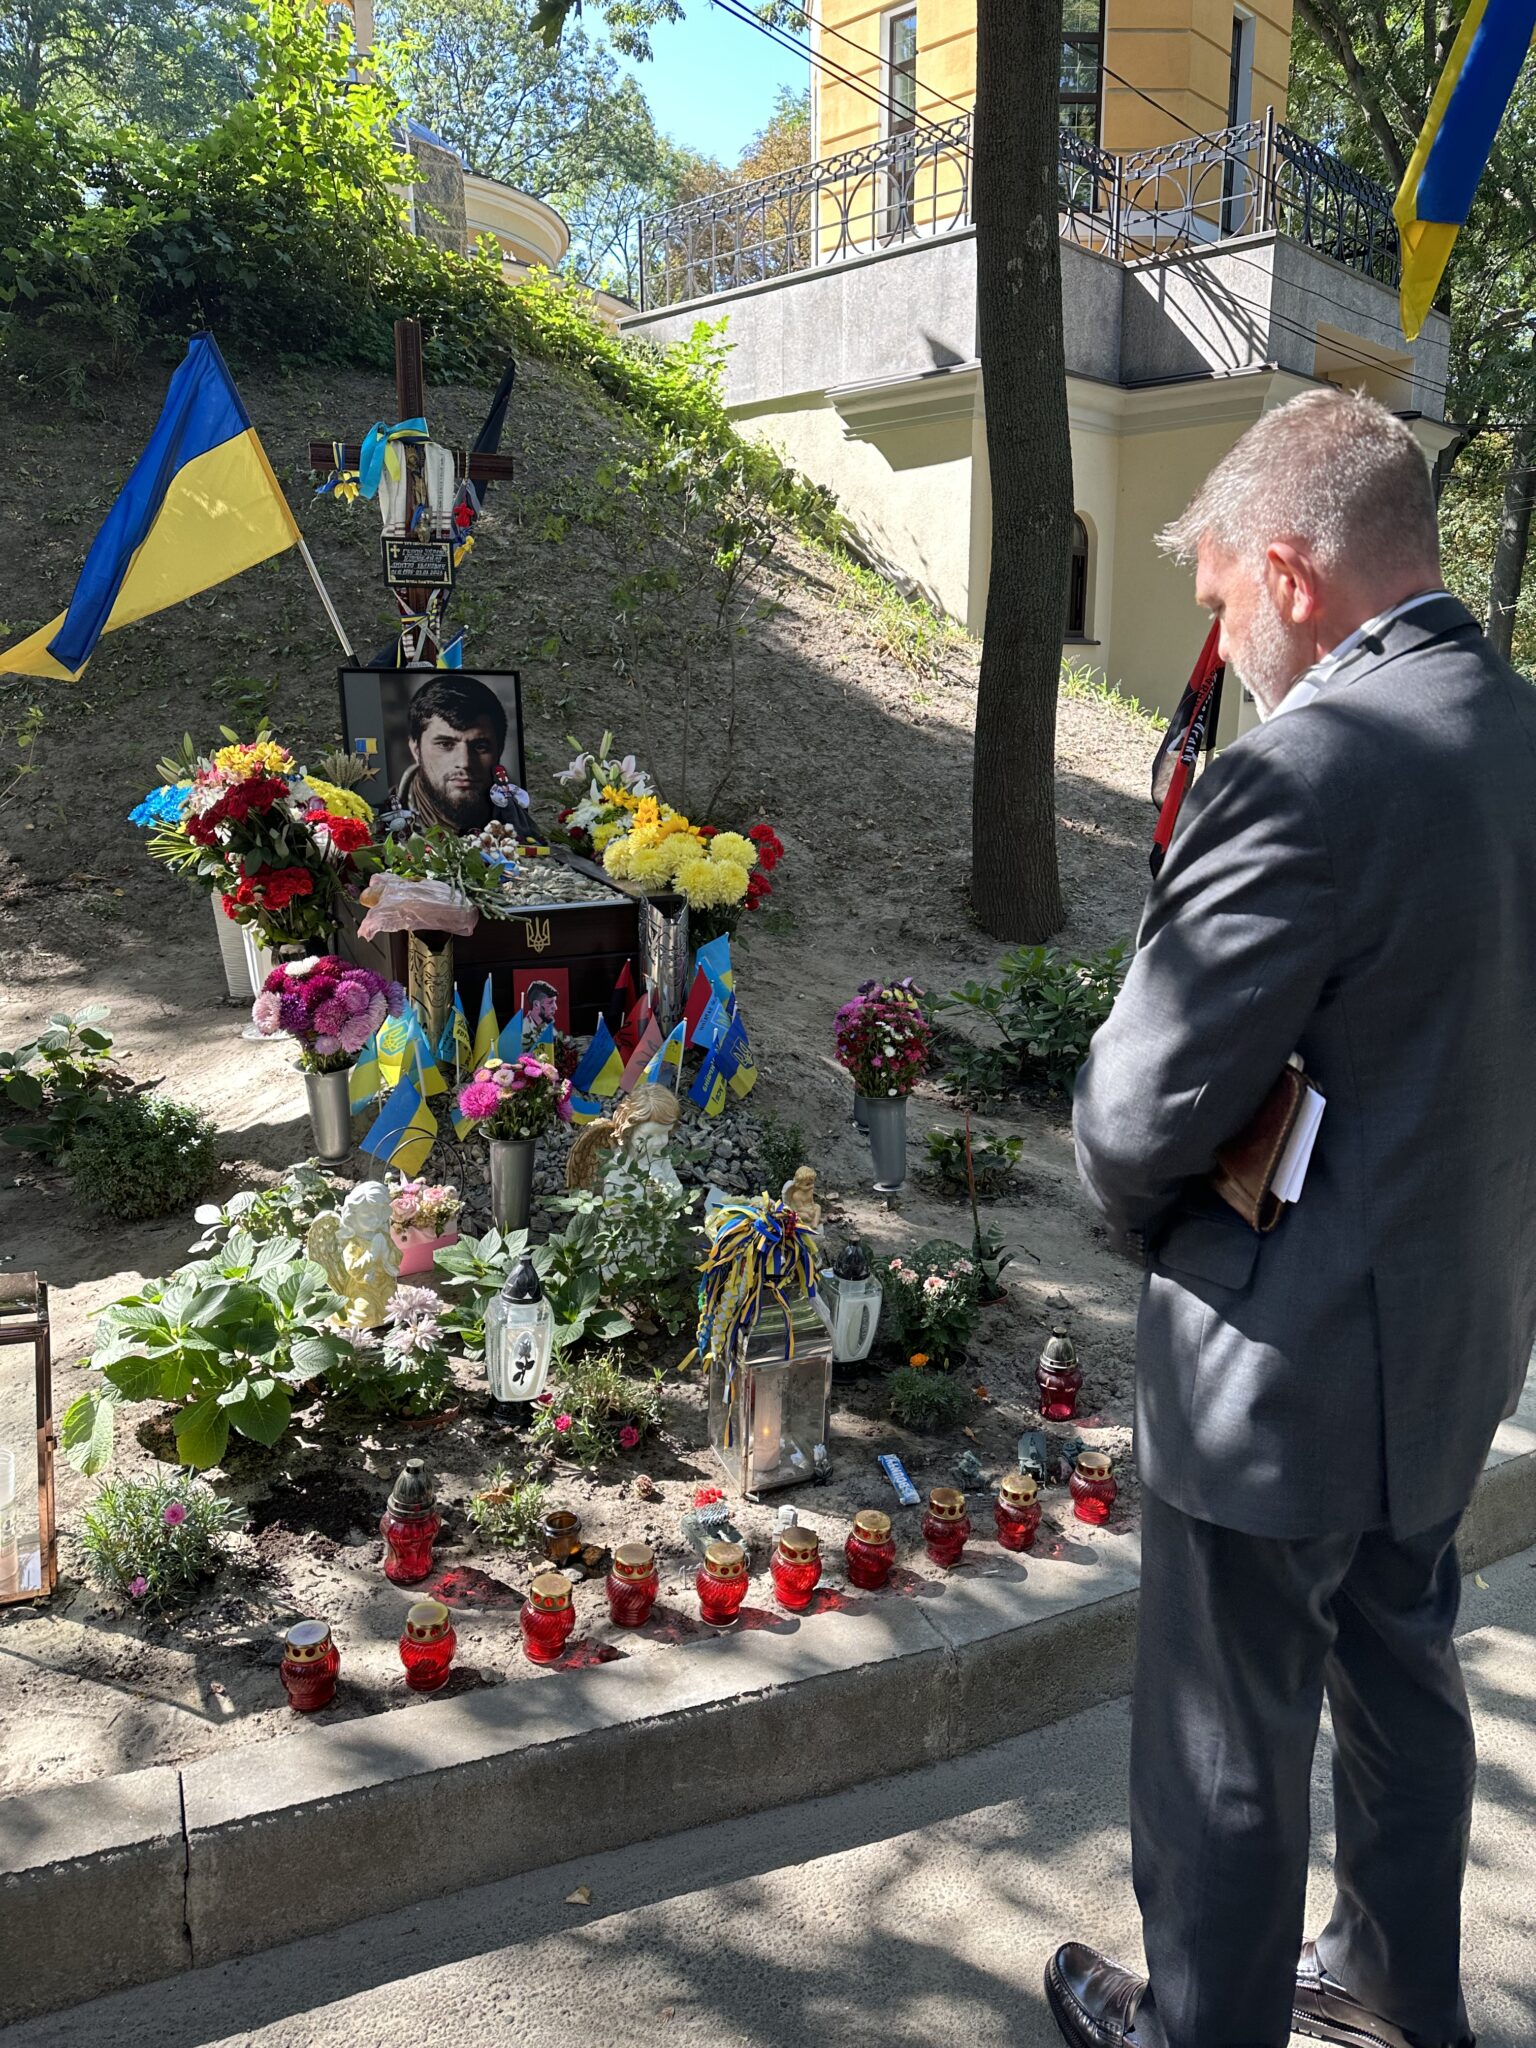 Ukraine Embodies the Values We Were Raised to Believe In